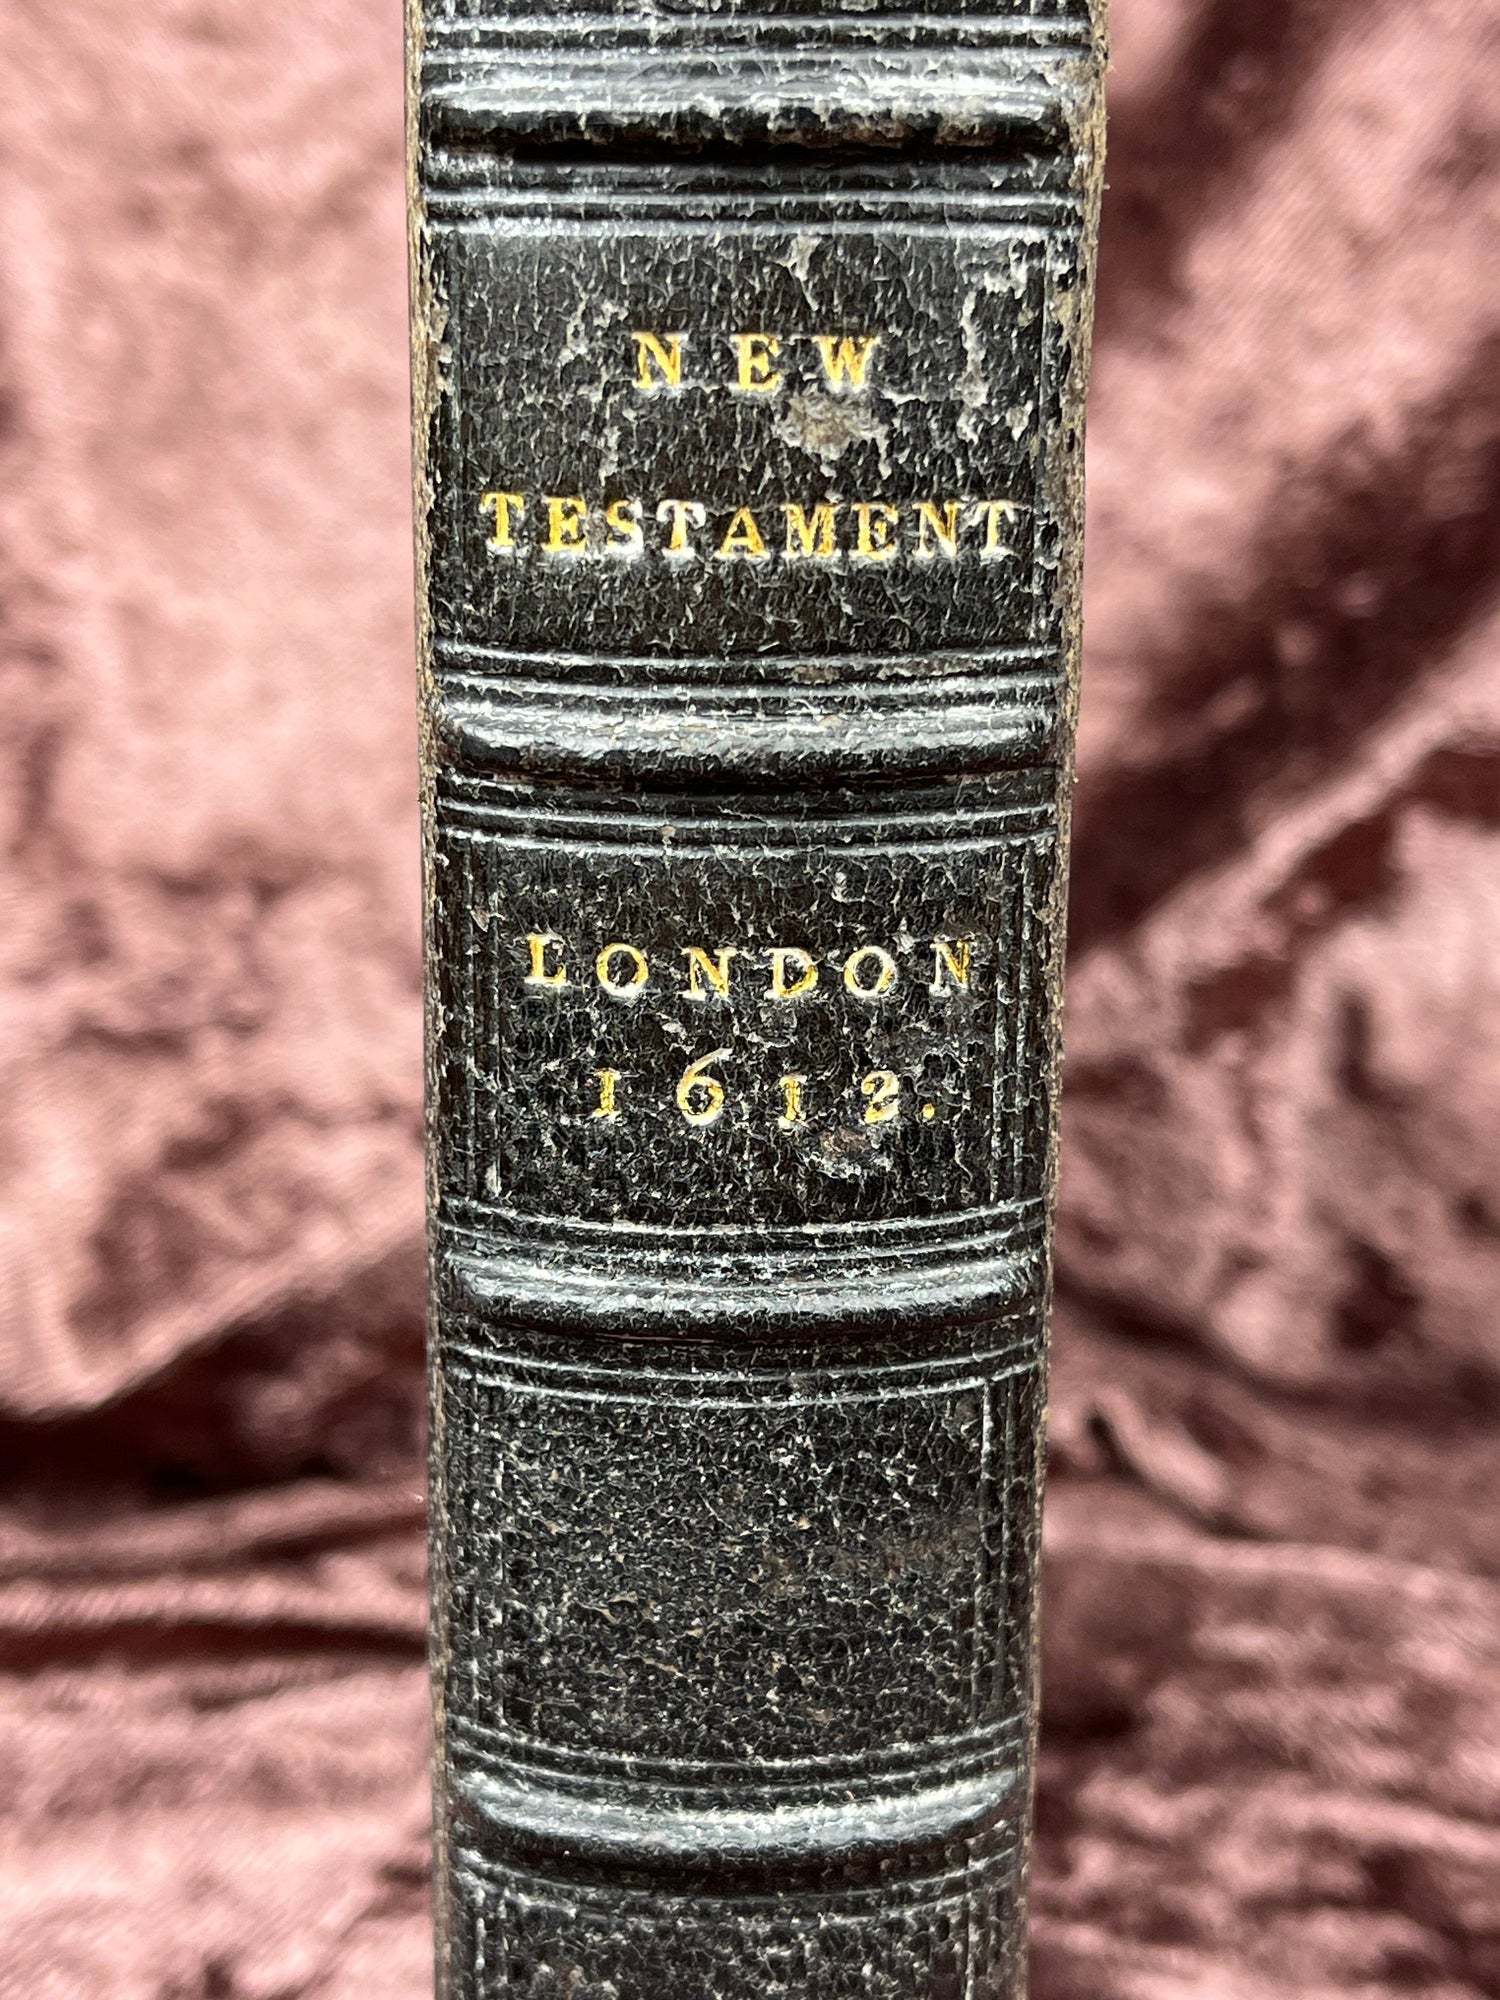 1612 Quarto Fine First Edition King James New Testament With Scottish Provenance E.T. Rare Books